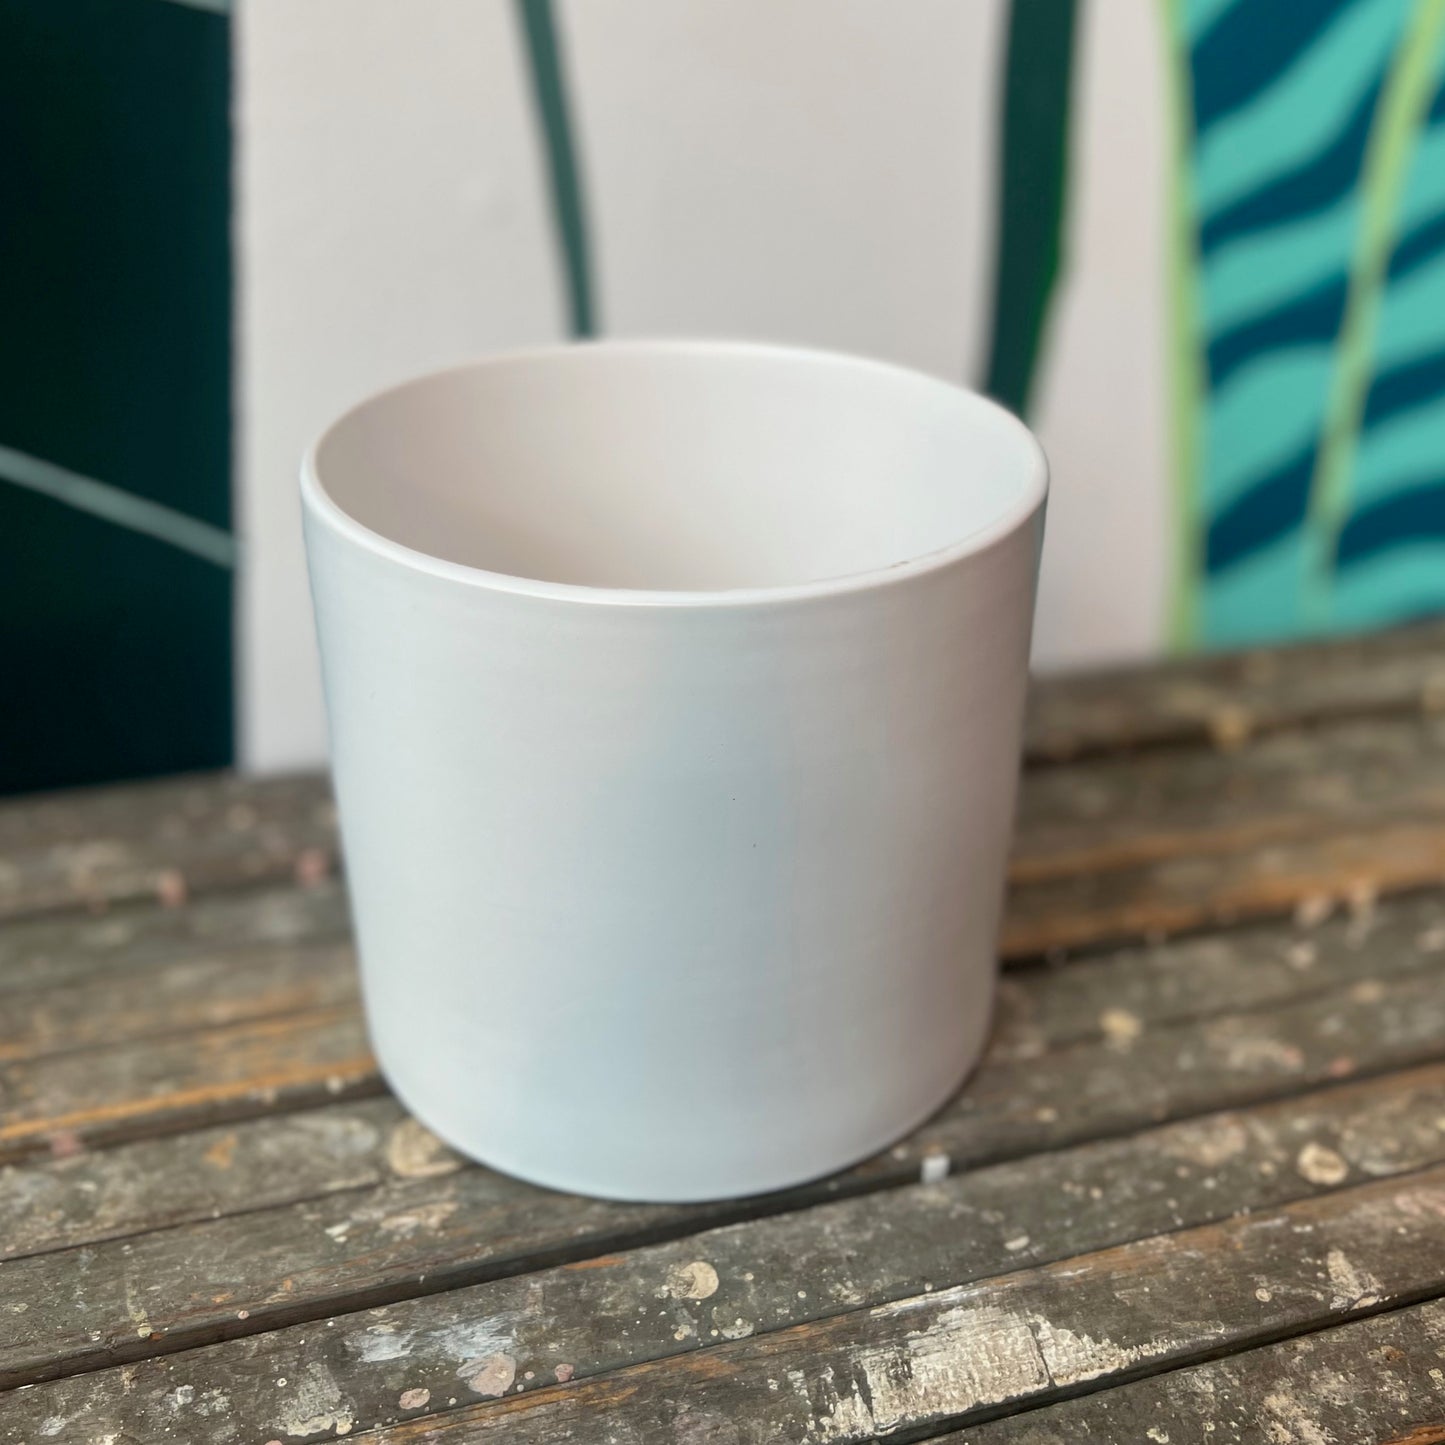 Ceramic Pot White